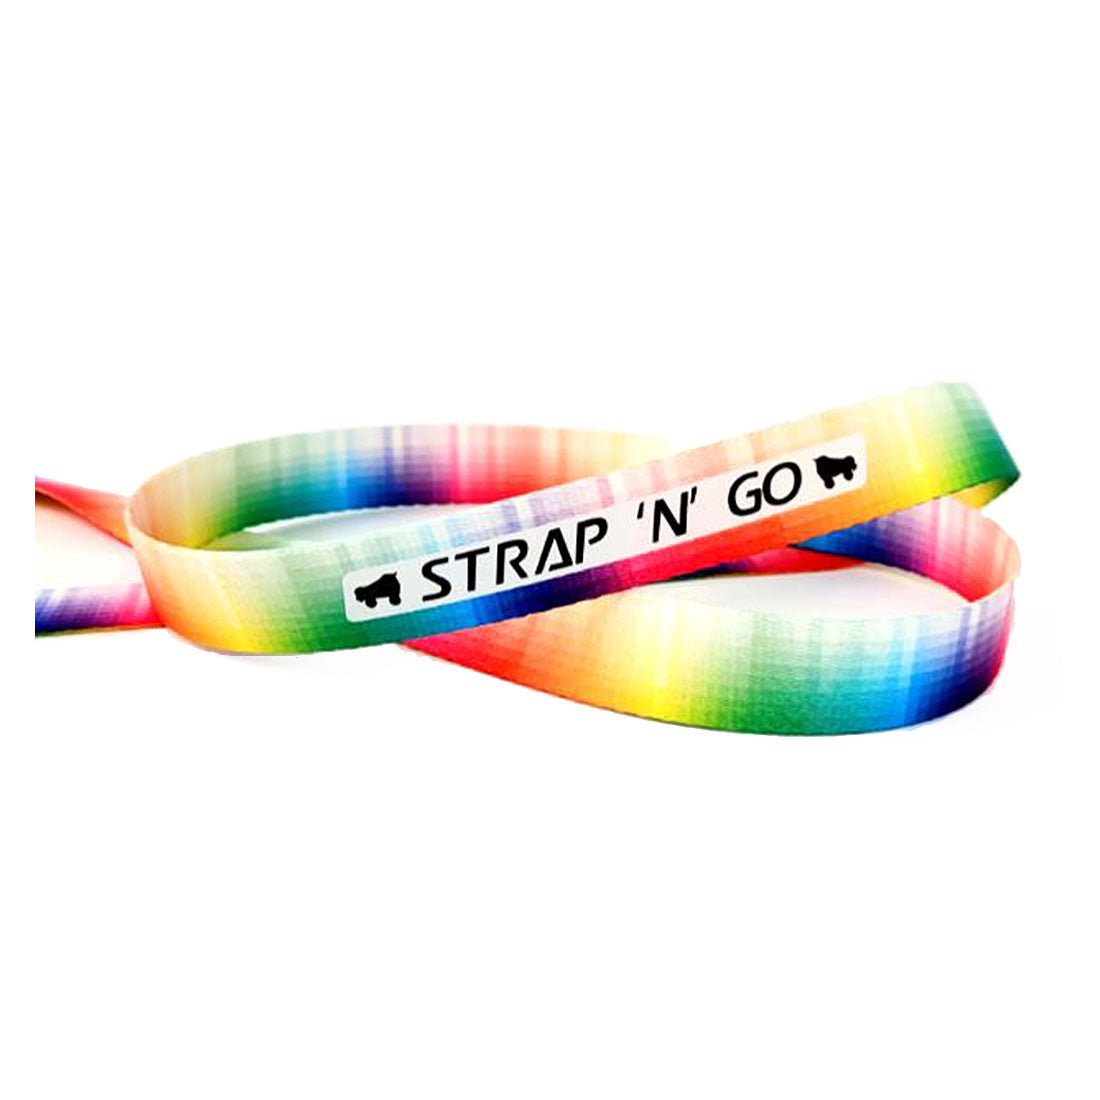 Strap N Go Skate Noose/Leash - Patterns Pixel Gradient Roller Skate Accessories